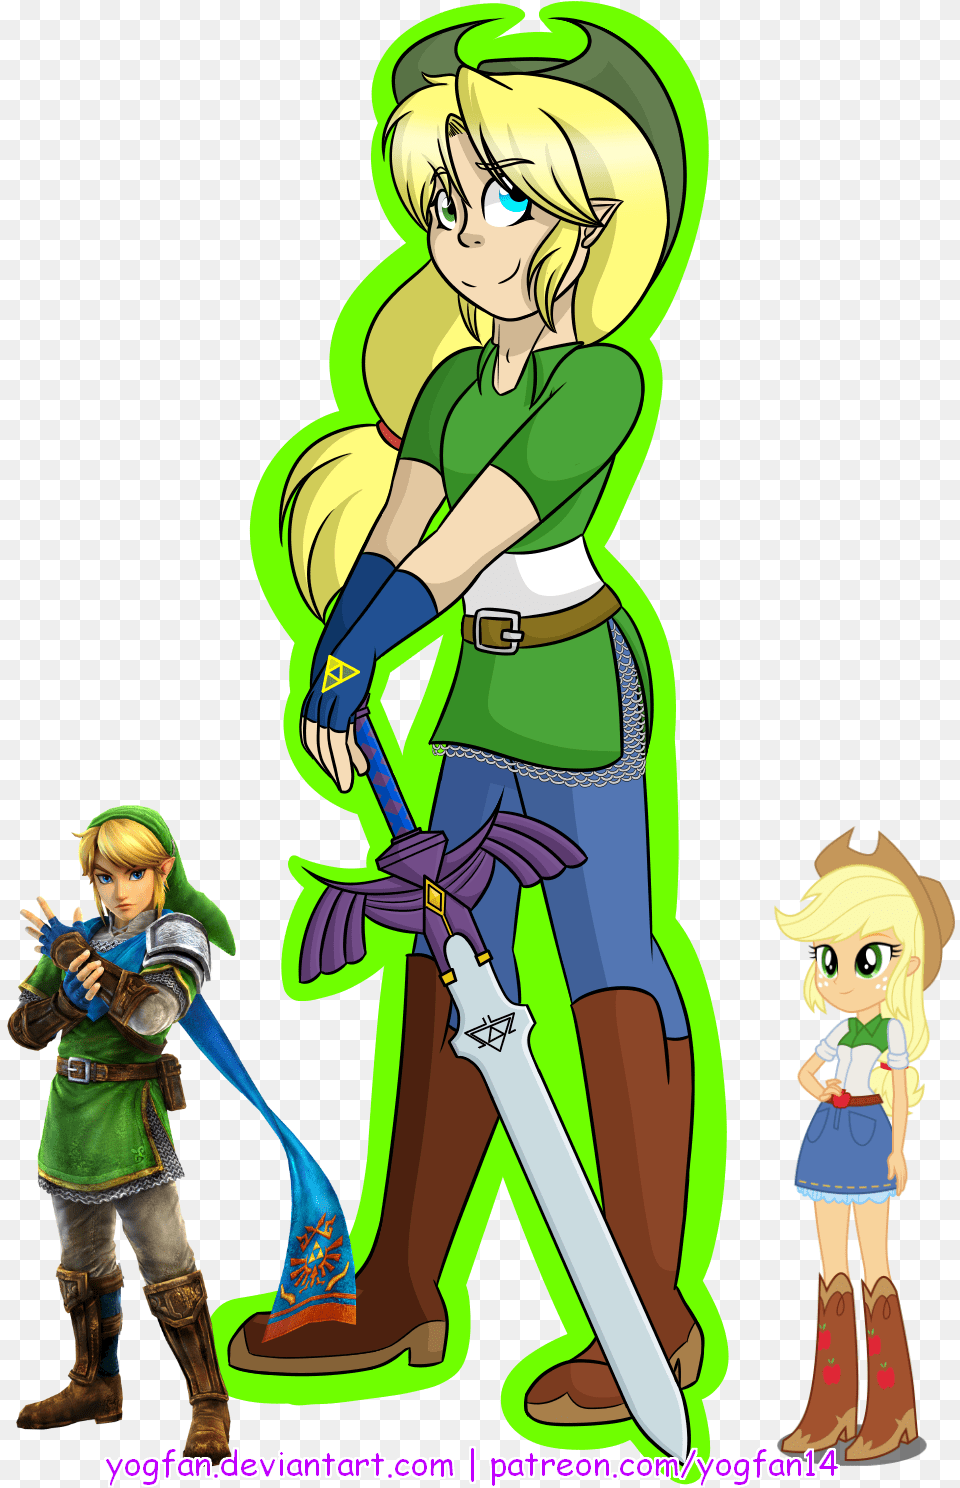 Apple Applejack Artist Legend Of Zelda Link Hyrule Warriors Cosplay Costume, Book, Cleaning, Publication, Comics Free Png Download